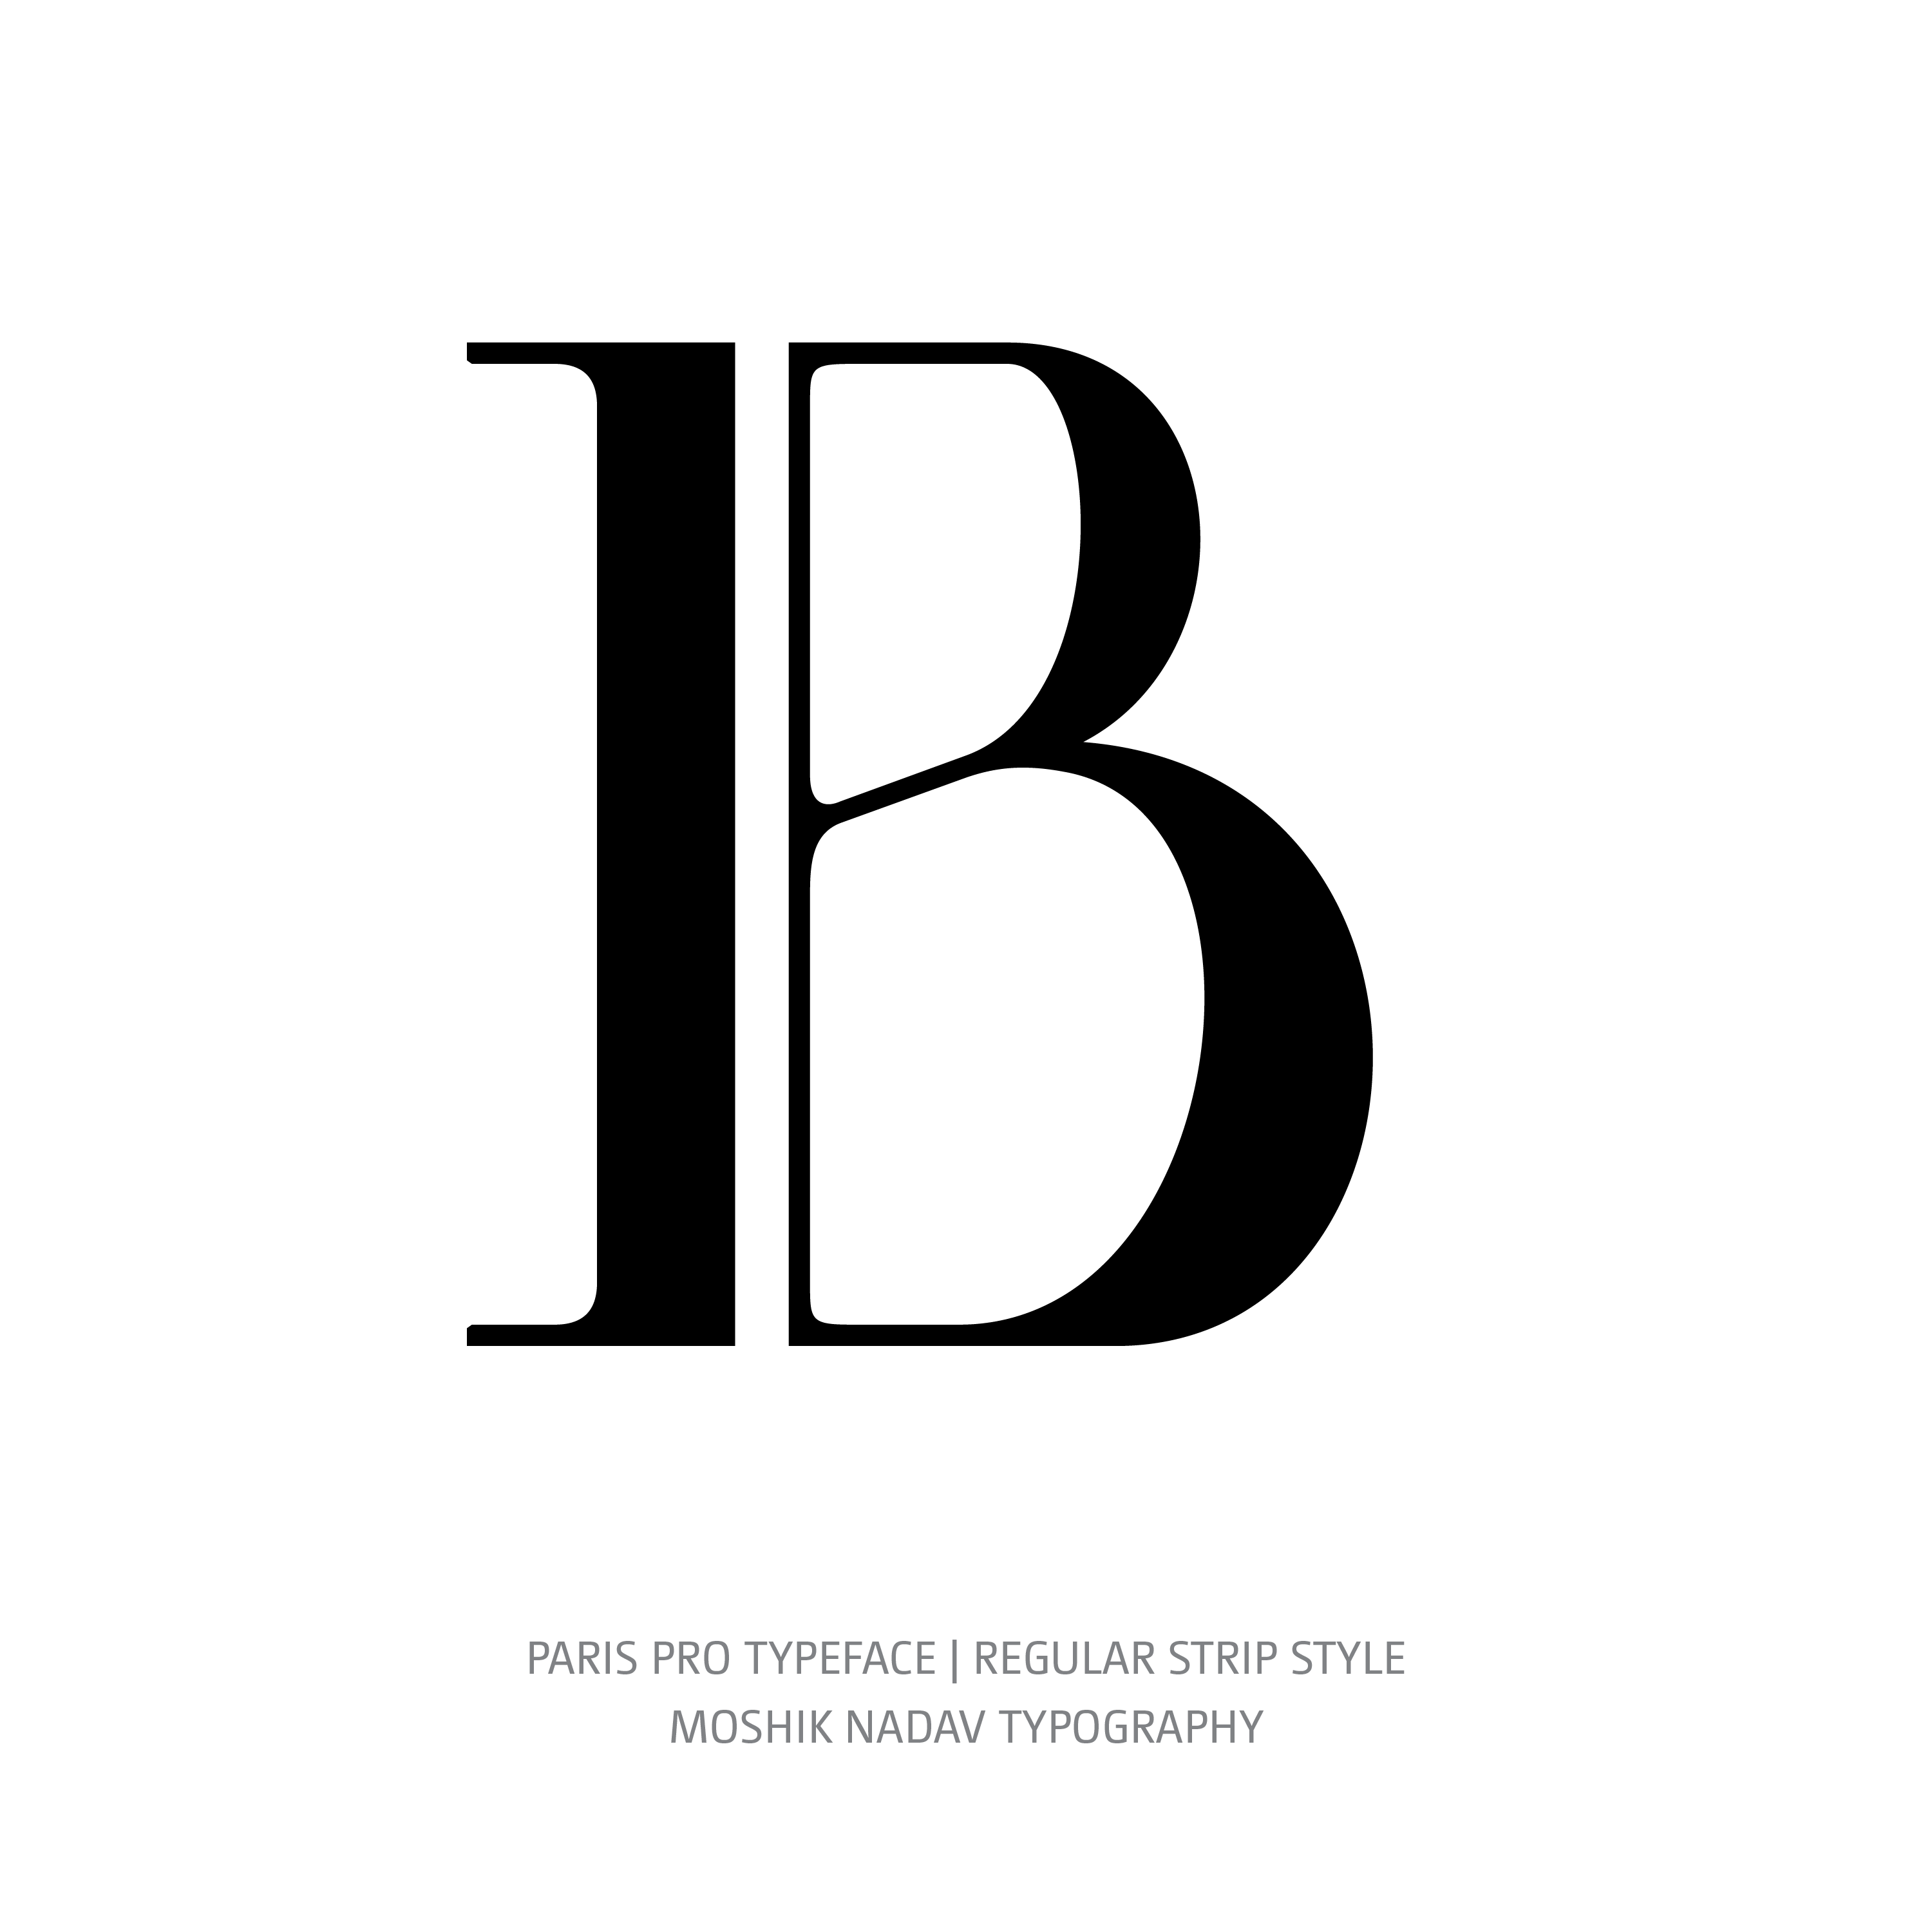 Paris Pro Typeface Regular Strip B